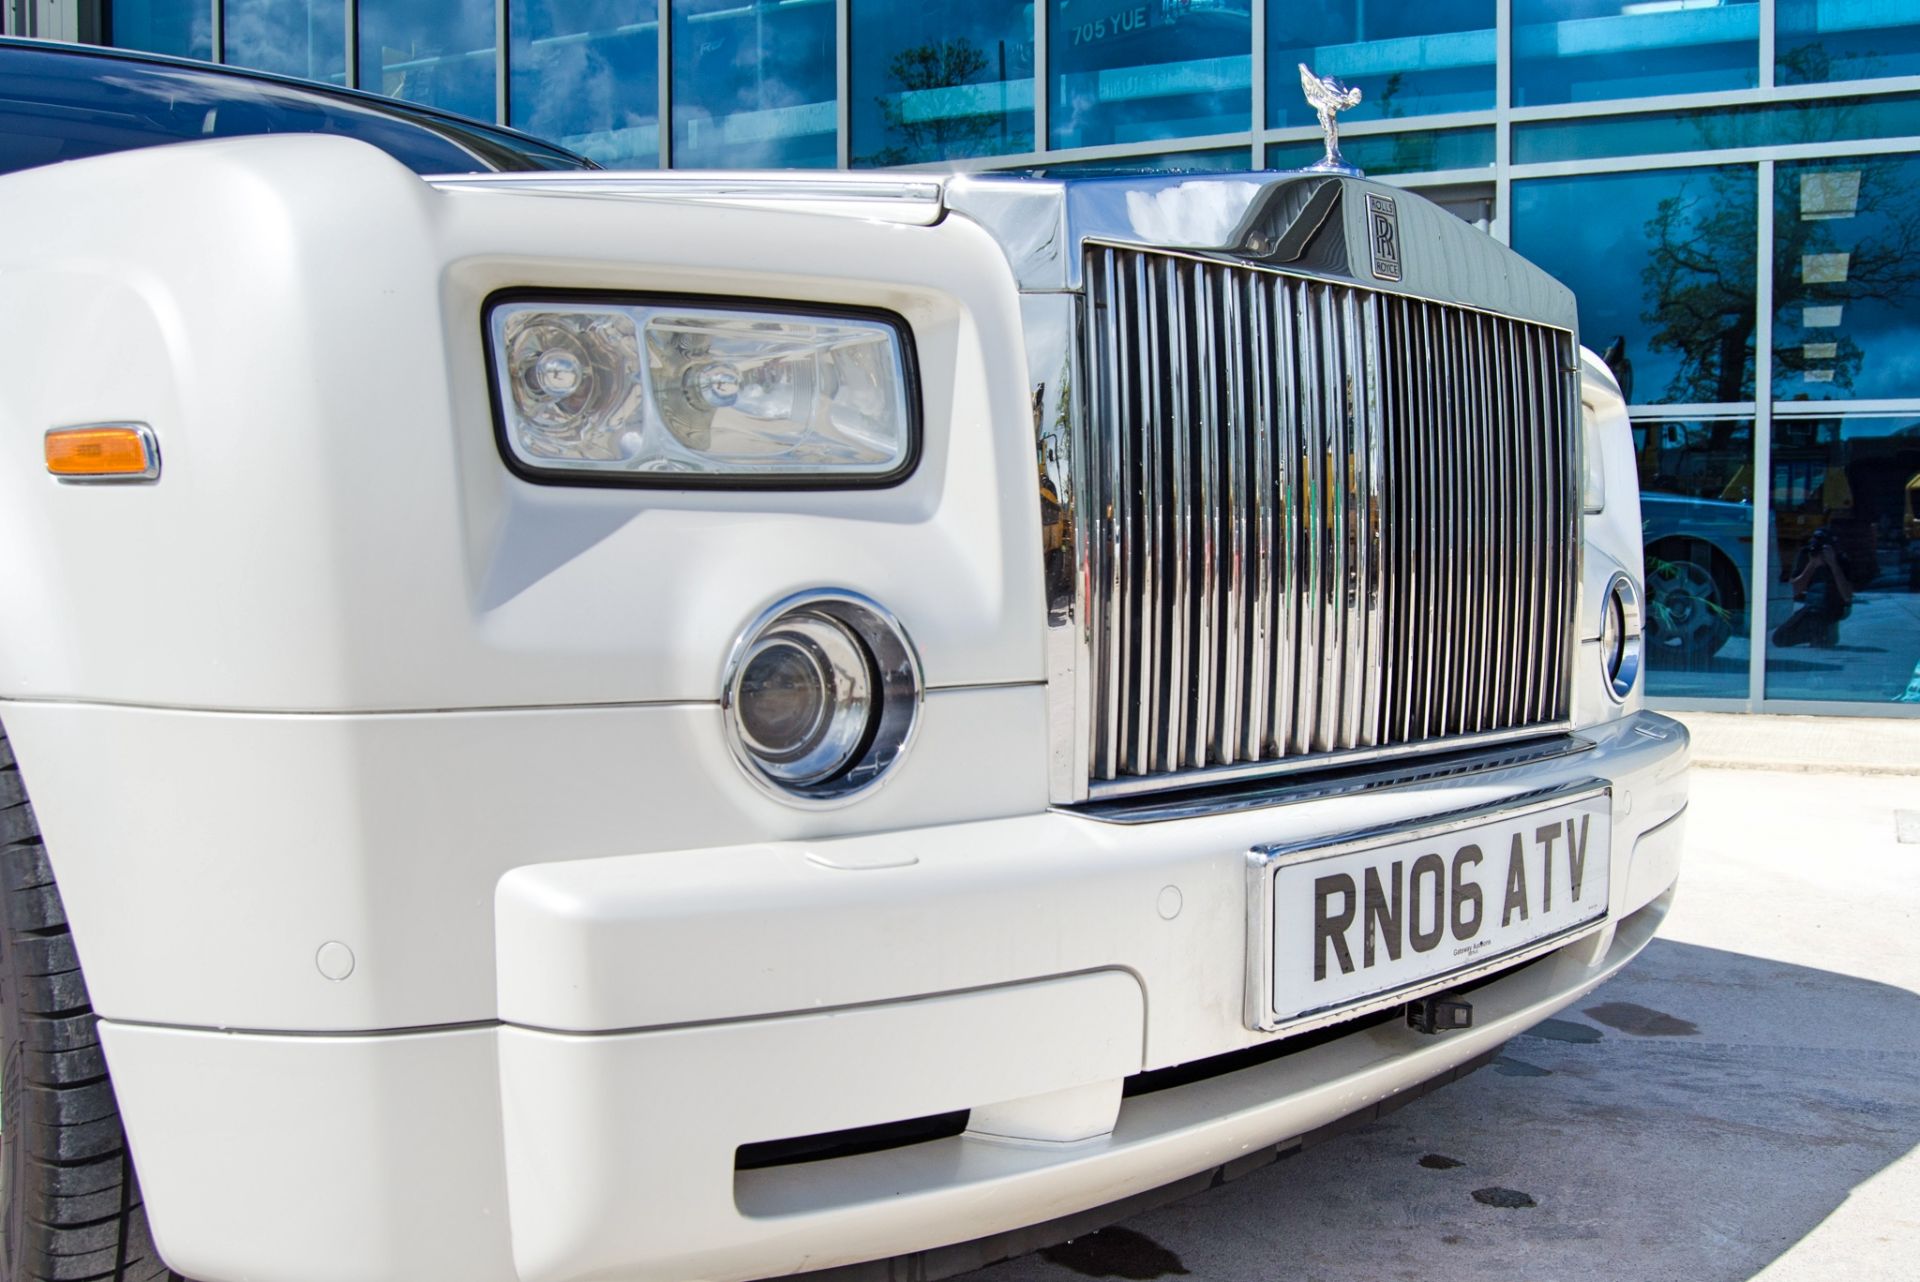 Rolls Royce Phantom 6749cc V12 Auto 4 door saloon car Registration Number: RN06 ATV Date of - Image 18 of 52